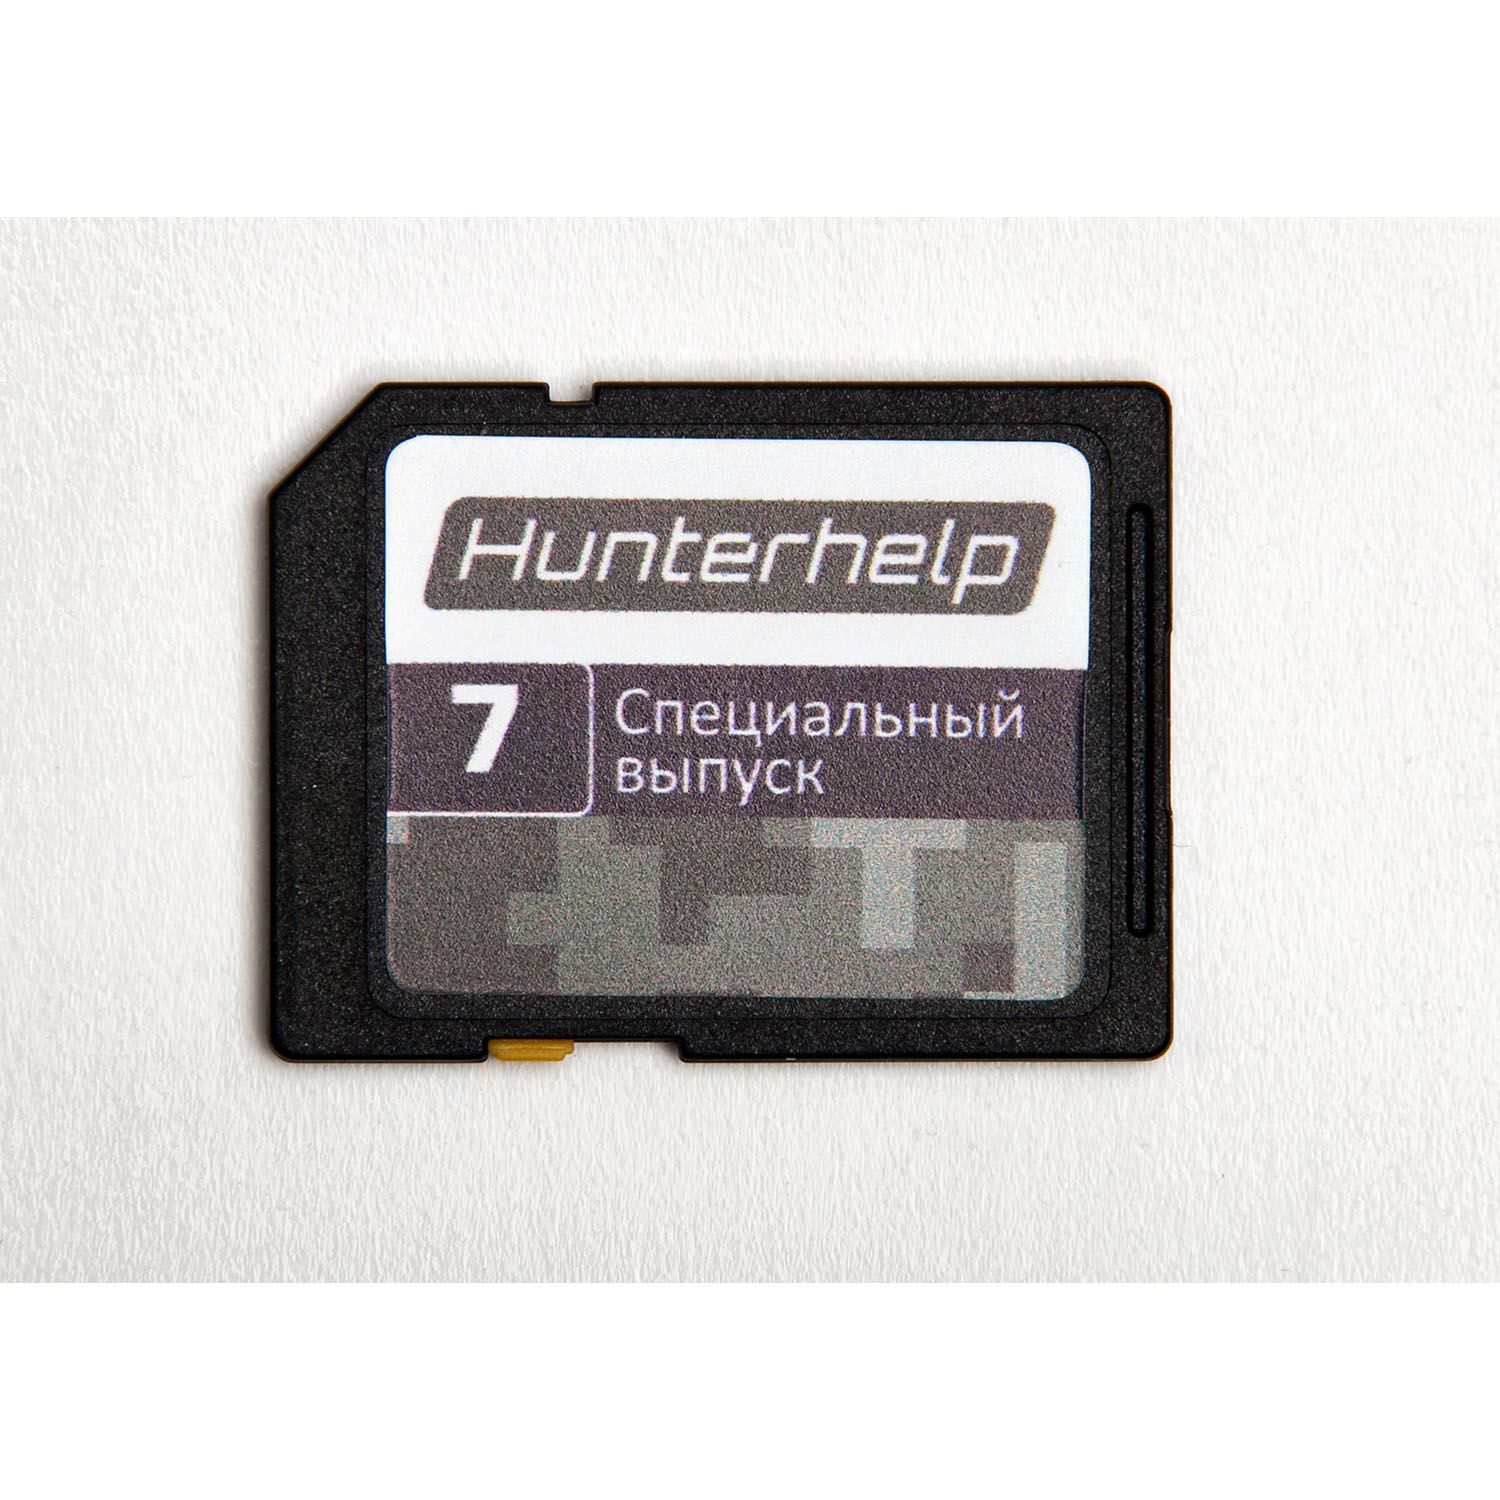 Электроманок Hunterhelp Master-3M, полная фонотека №7, динамик Тромб